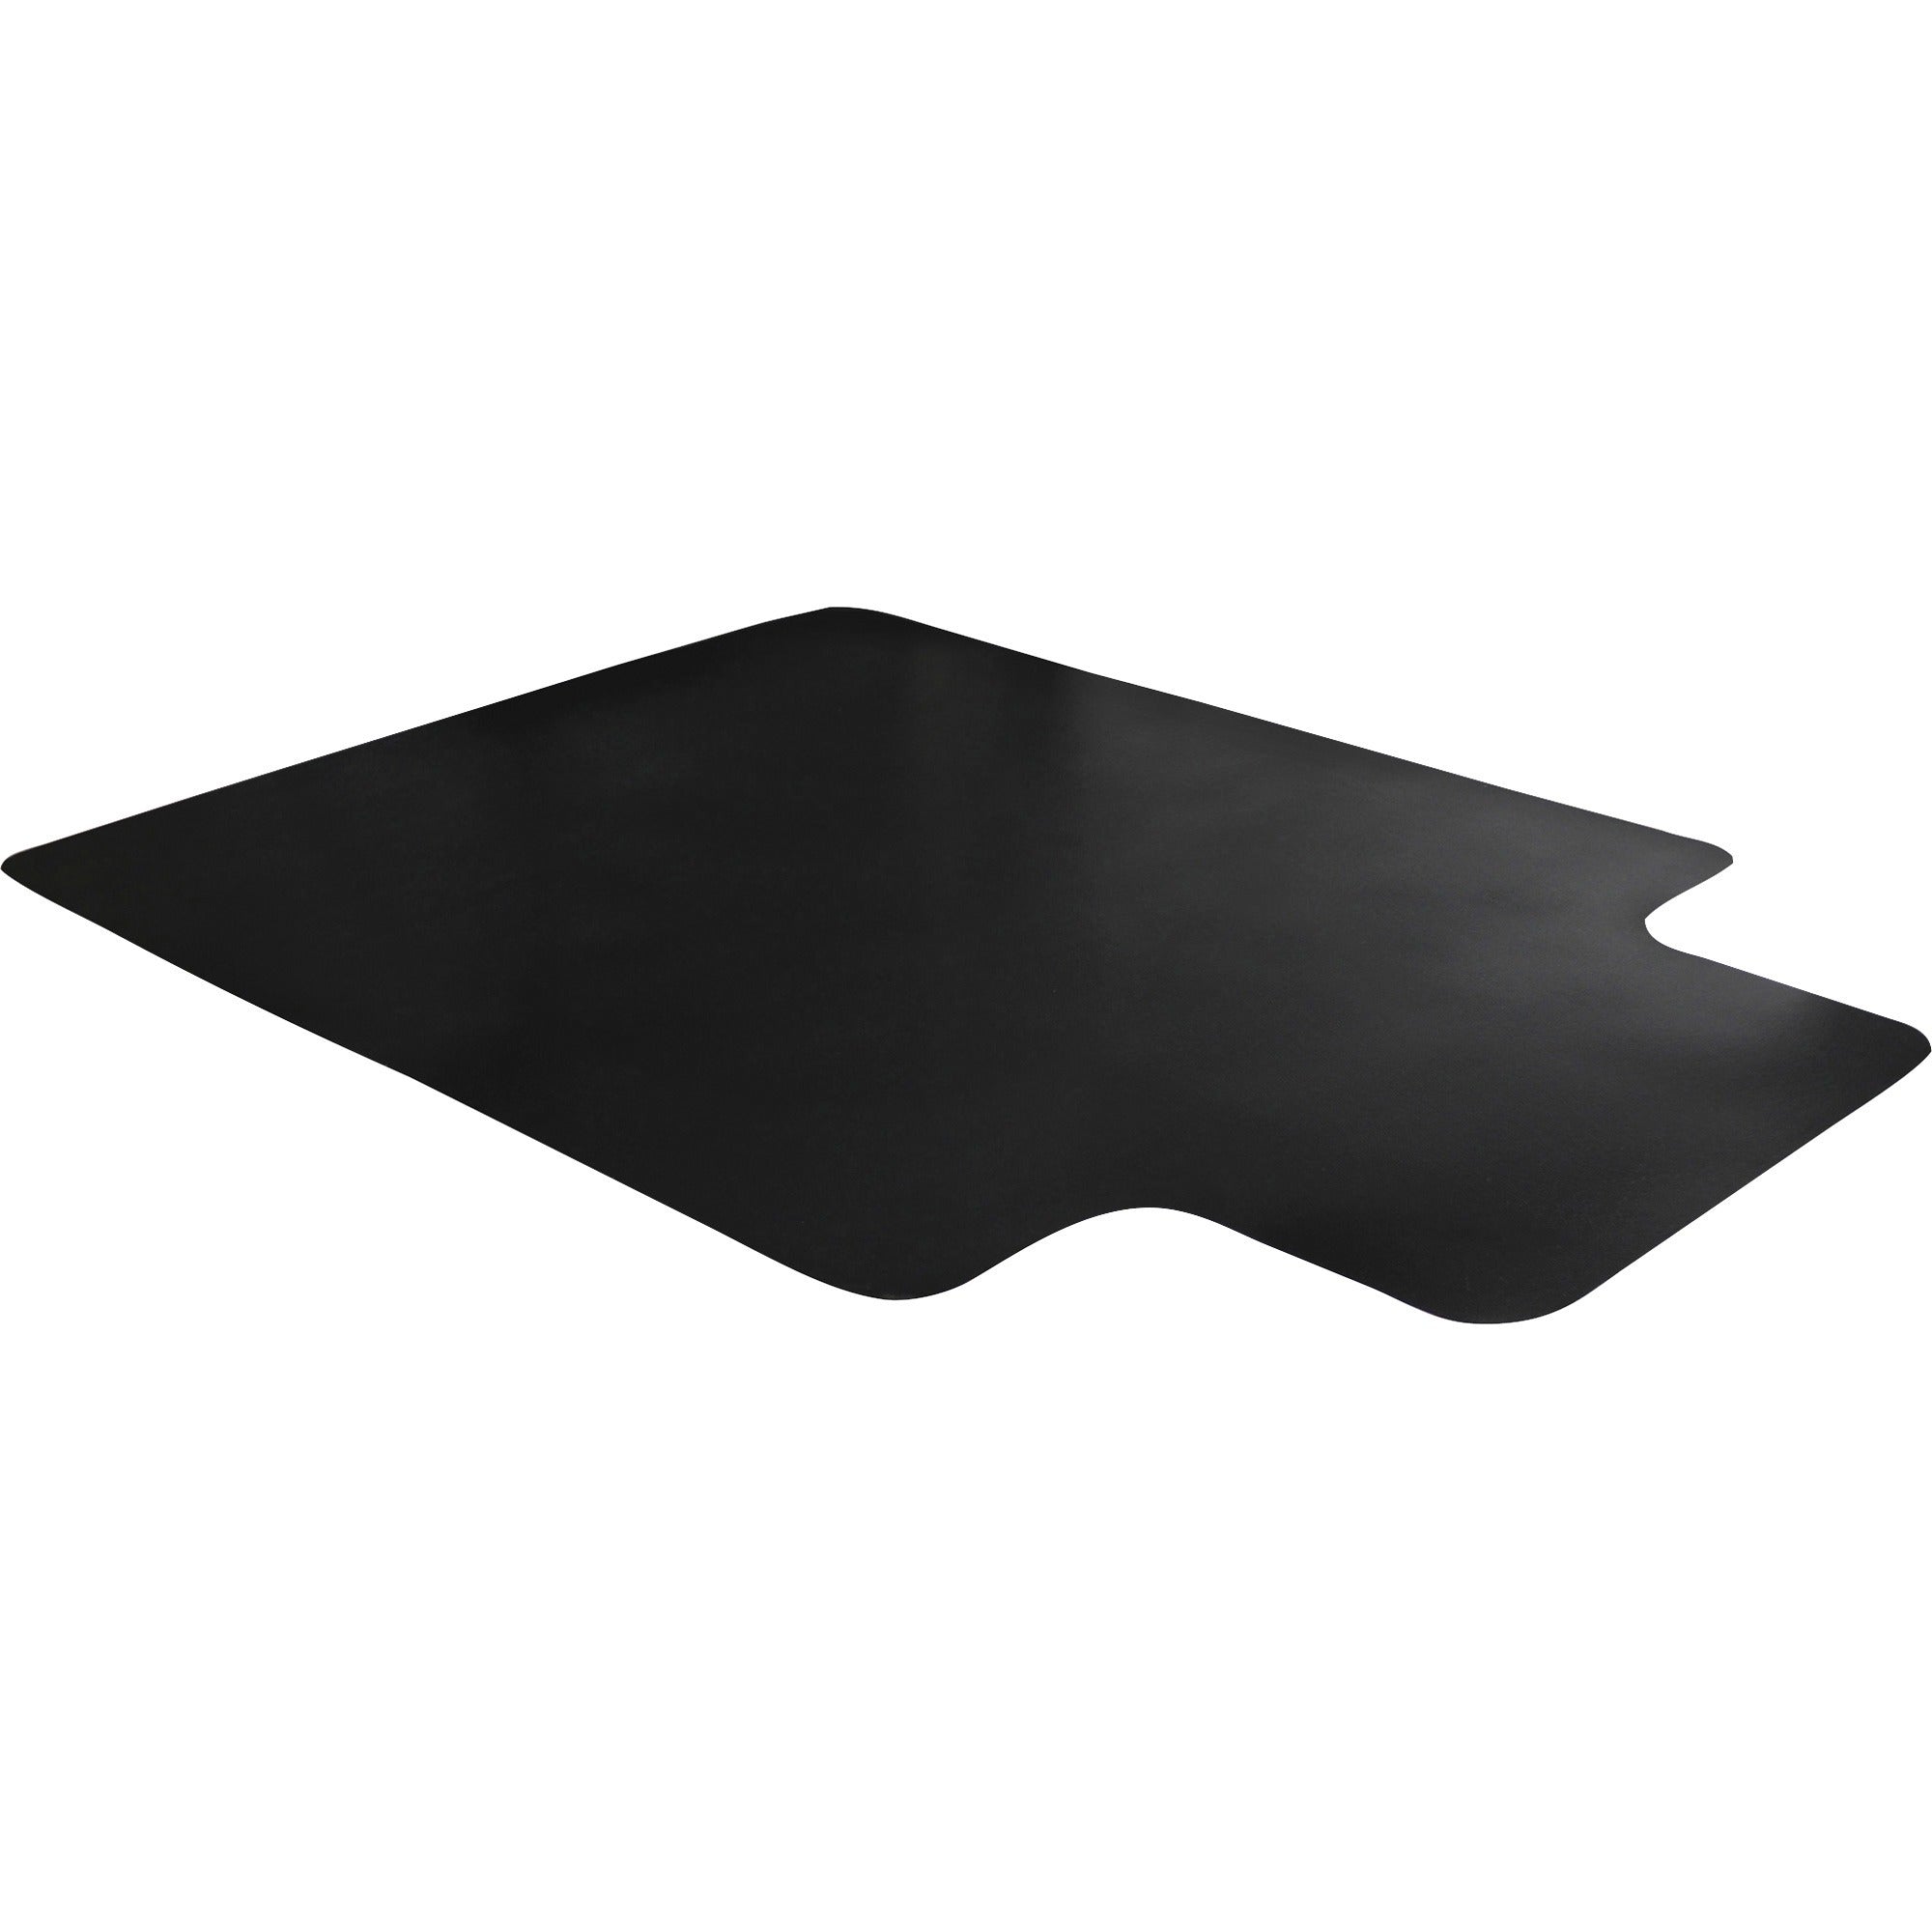 advantagemat-black-vinyl-lipped-chair-mat-for-hard-floor-45-x-53-hard-floor-53-length-x-45-width-x-0080-depth-x-0080-thickness-lip-size-25-length-x-12-width-lipped-classic-polyvinyl-chloride-pvc-black-1each-taa-co_flrfc124553hlbv - 1